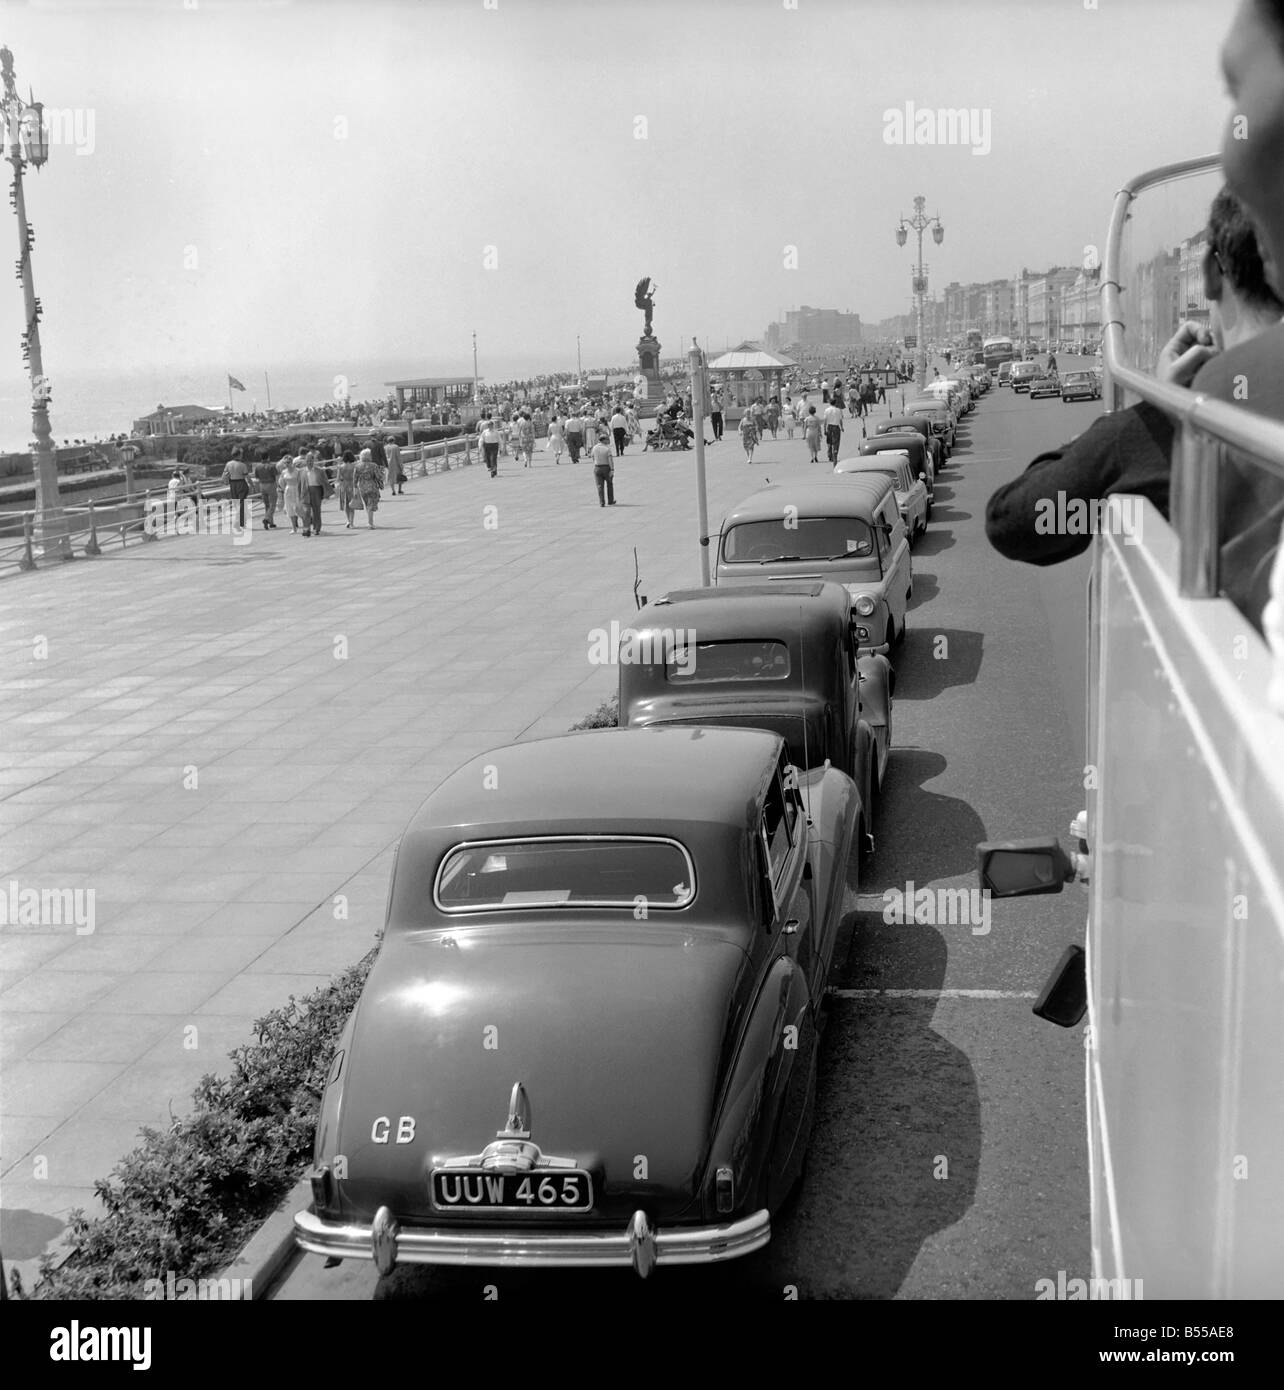 Traffic/Parked cars, street scene. June 1960 M4336-002 Stock Photo